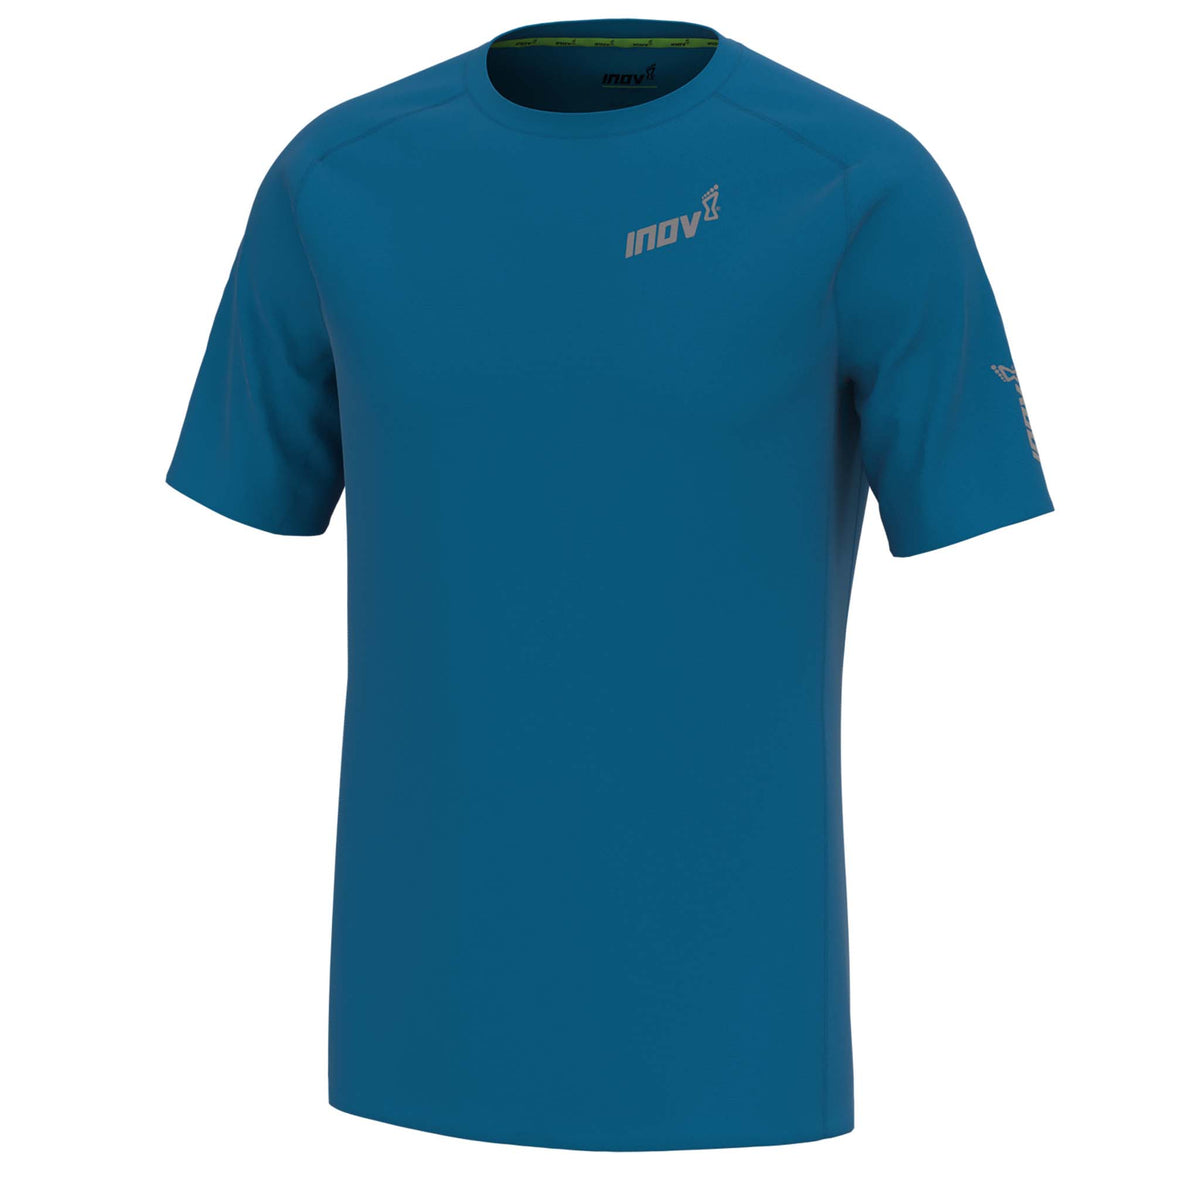 Inov-8 Base Elite Short Sleeve t-shirt de course a pied manches courtes bleu homme